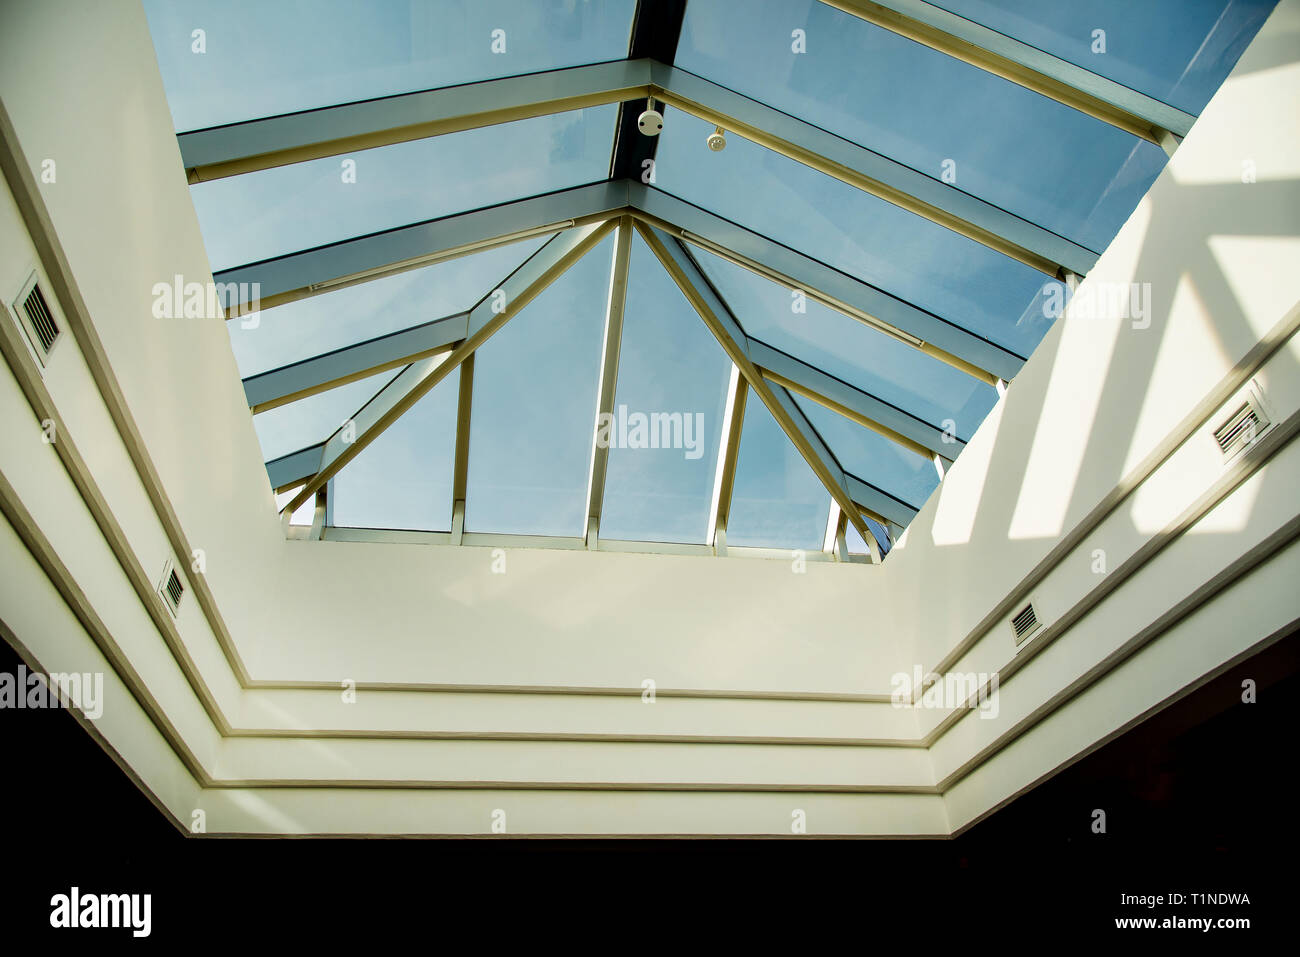 Geometric glass roof . Modern interior design Stock Photo - Alamy